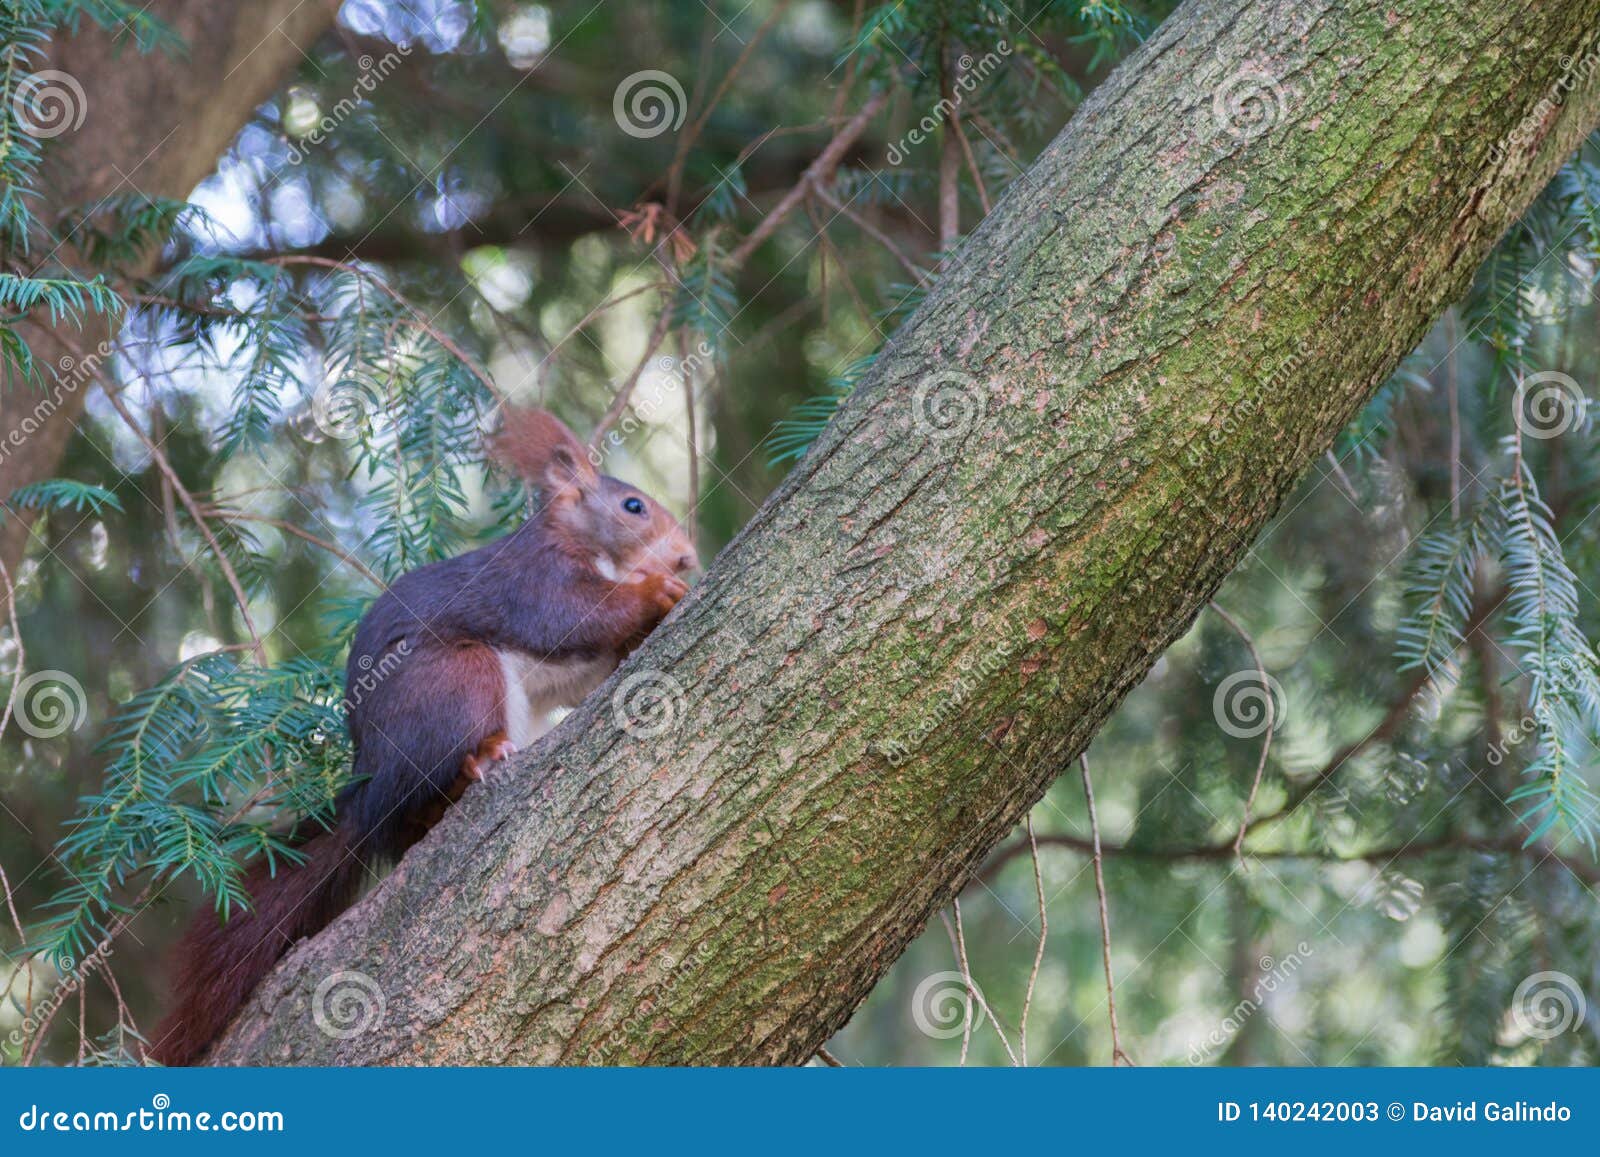 cute squirrel climbing the tree